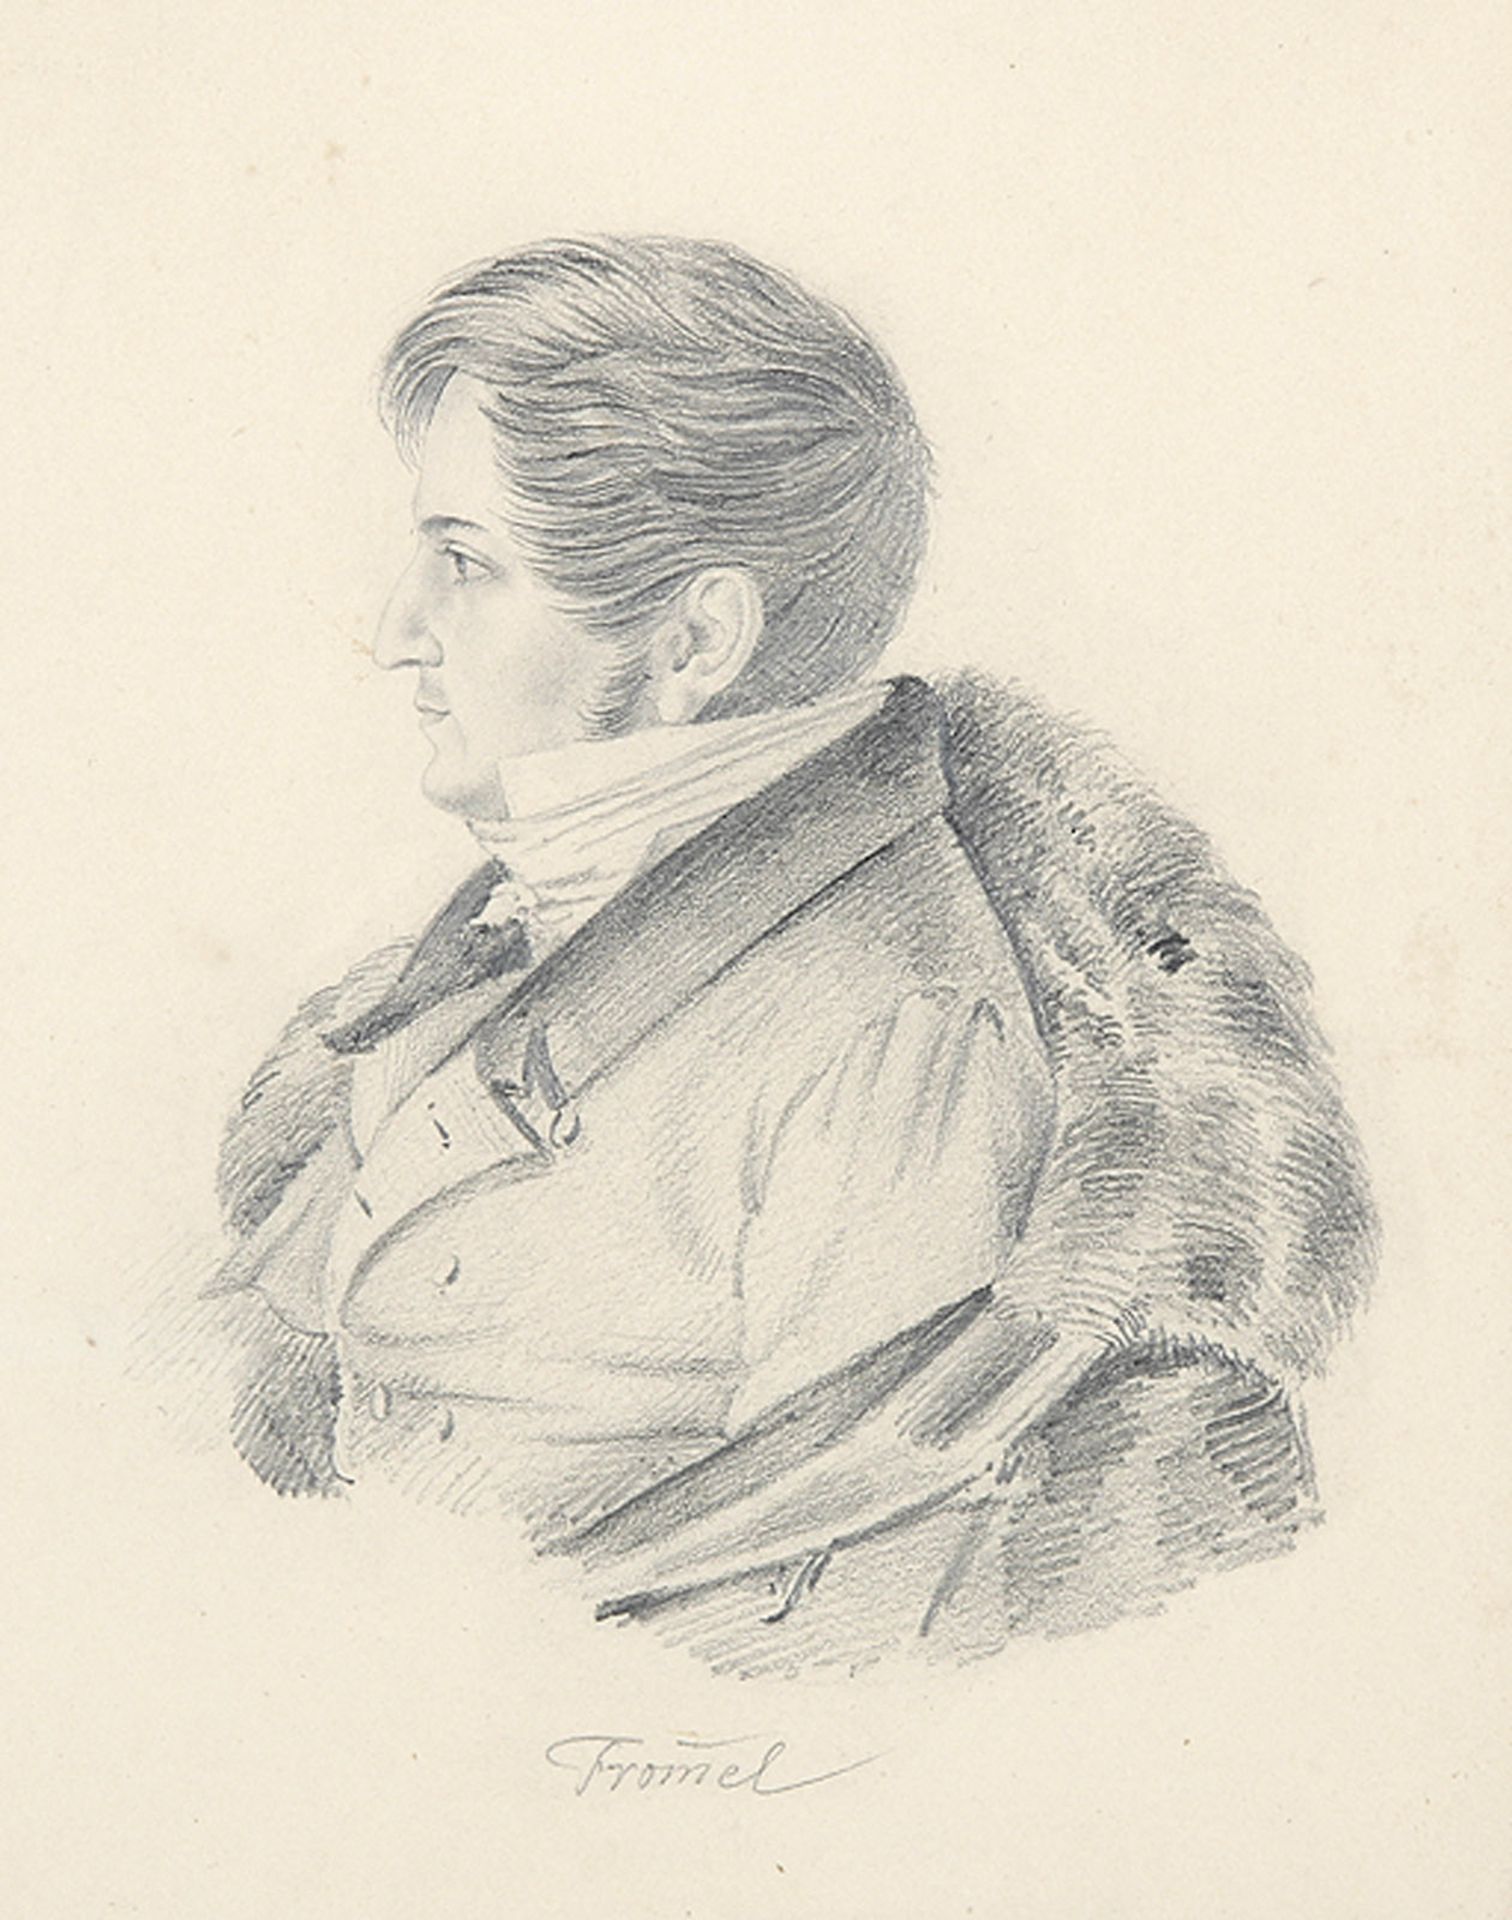 RUDOLF KUNTZ: Brustbild des Malers Carl Ludwig Frommel im Profil nach links.